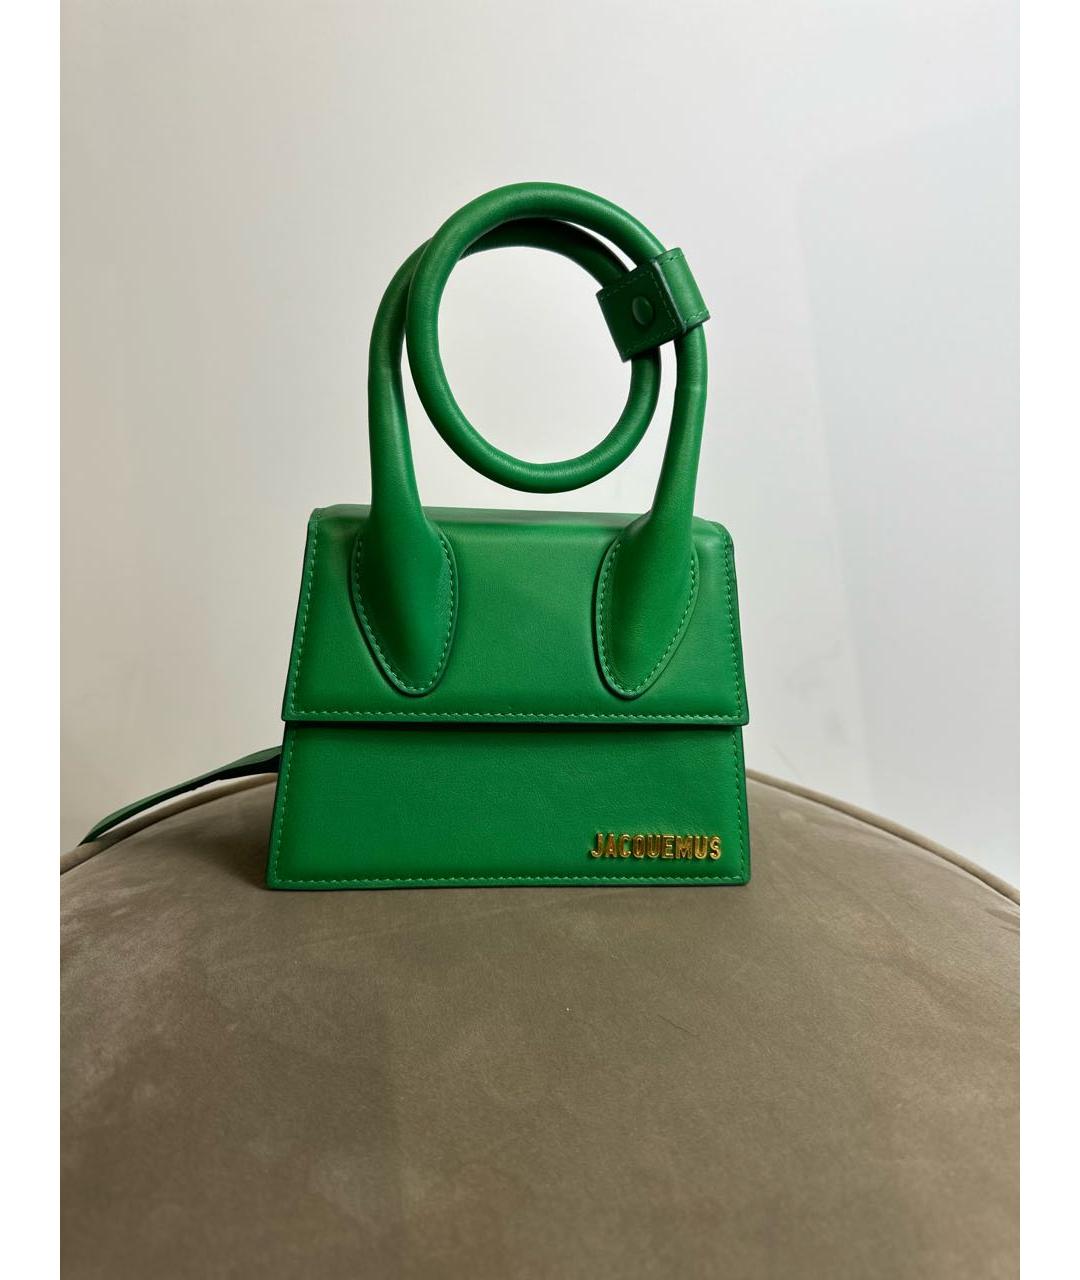 JACQUEMUS Зеленая сумка с короткими ручками, фото 4